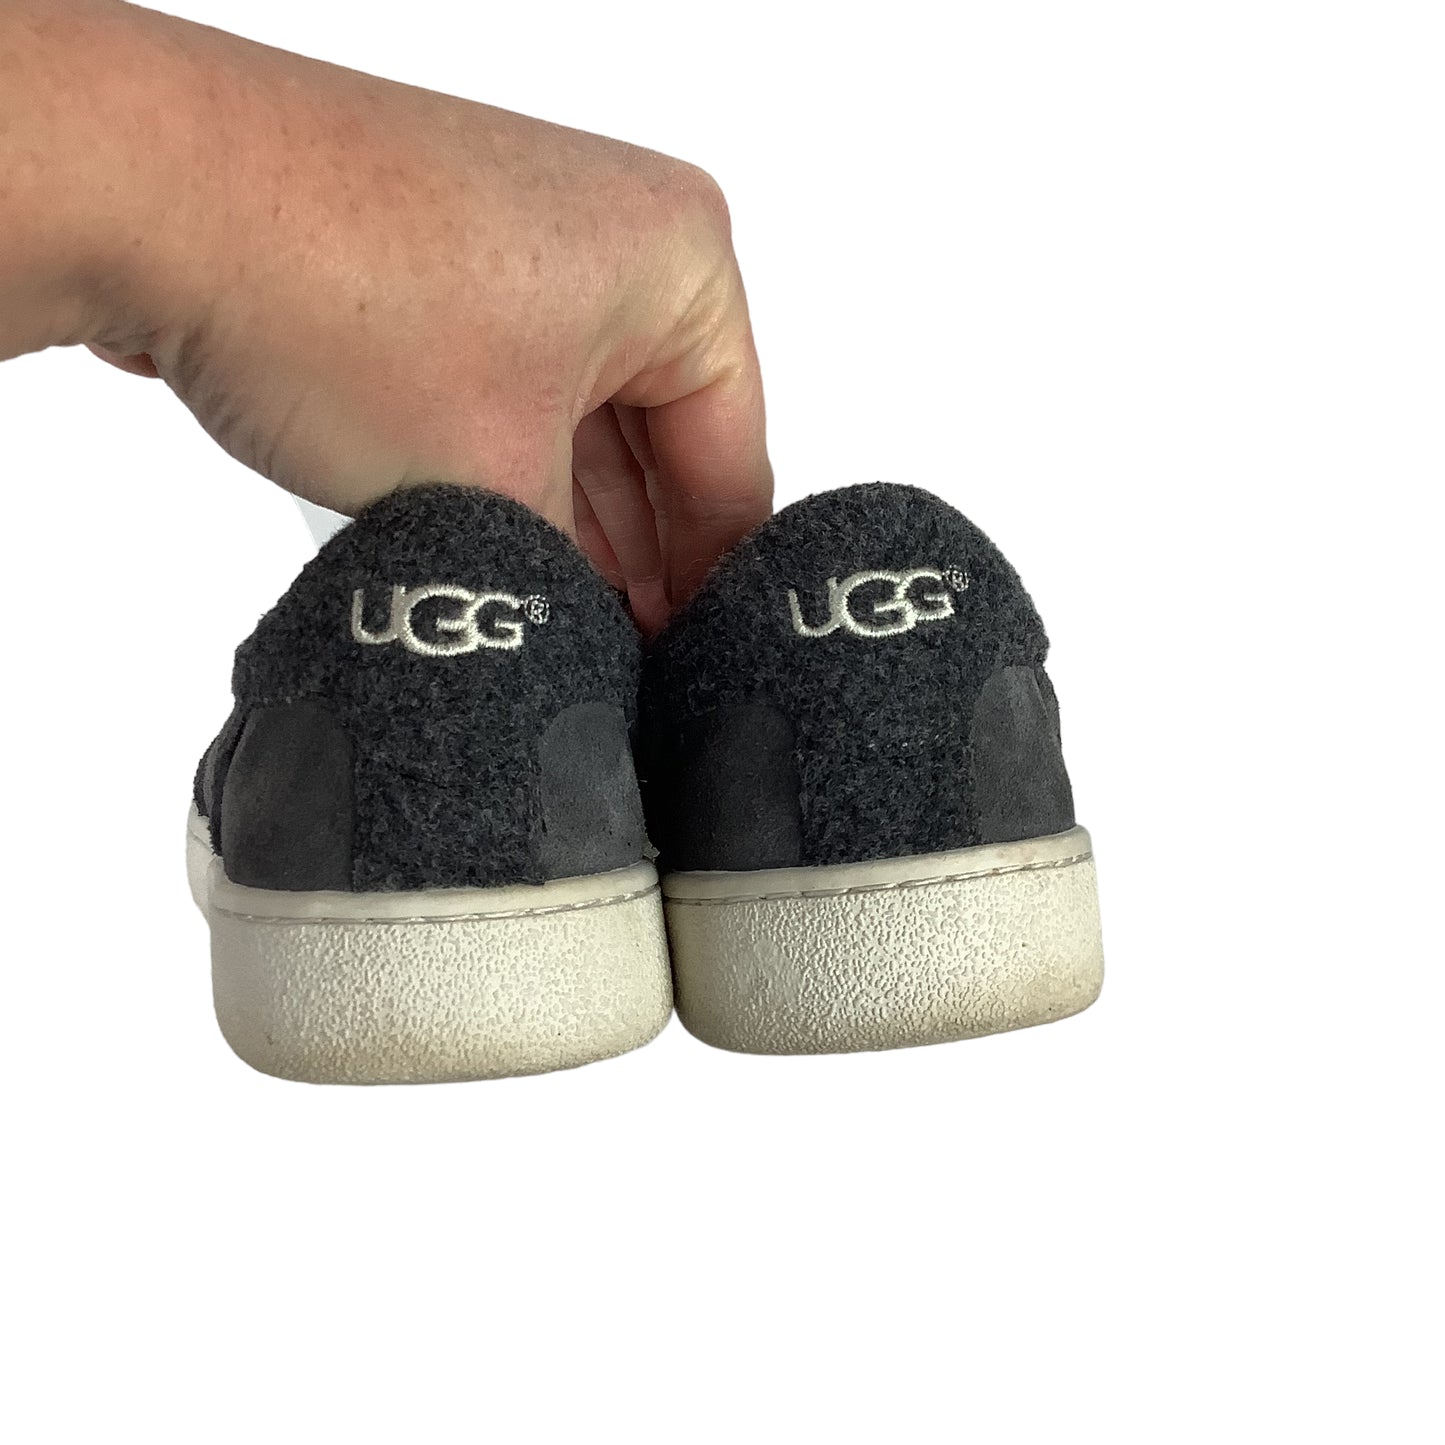 Shoes Designer By Ugg  Size: 7.5